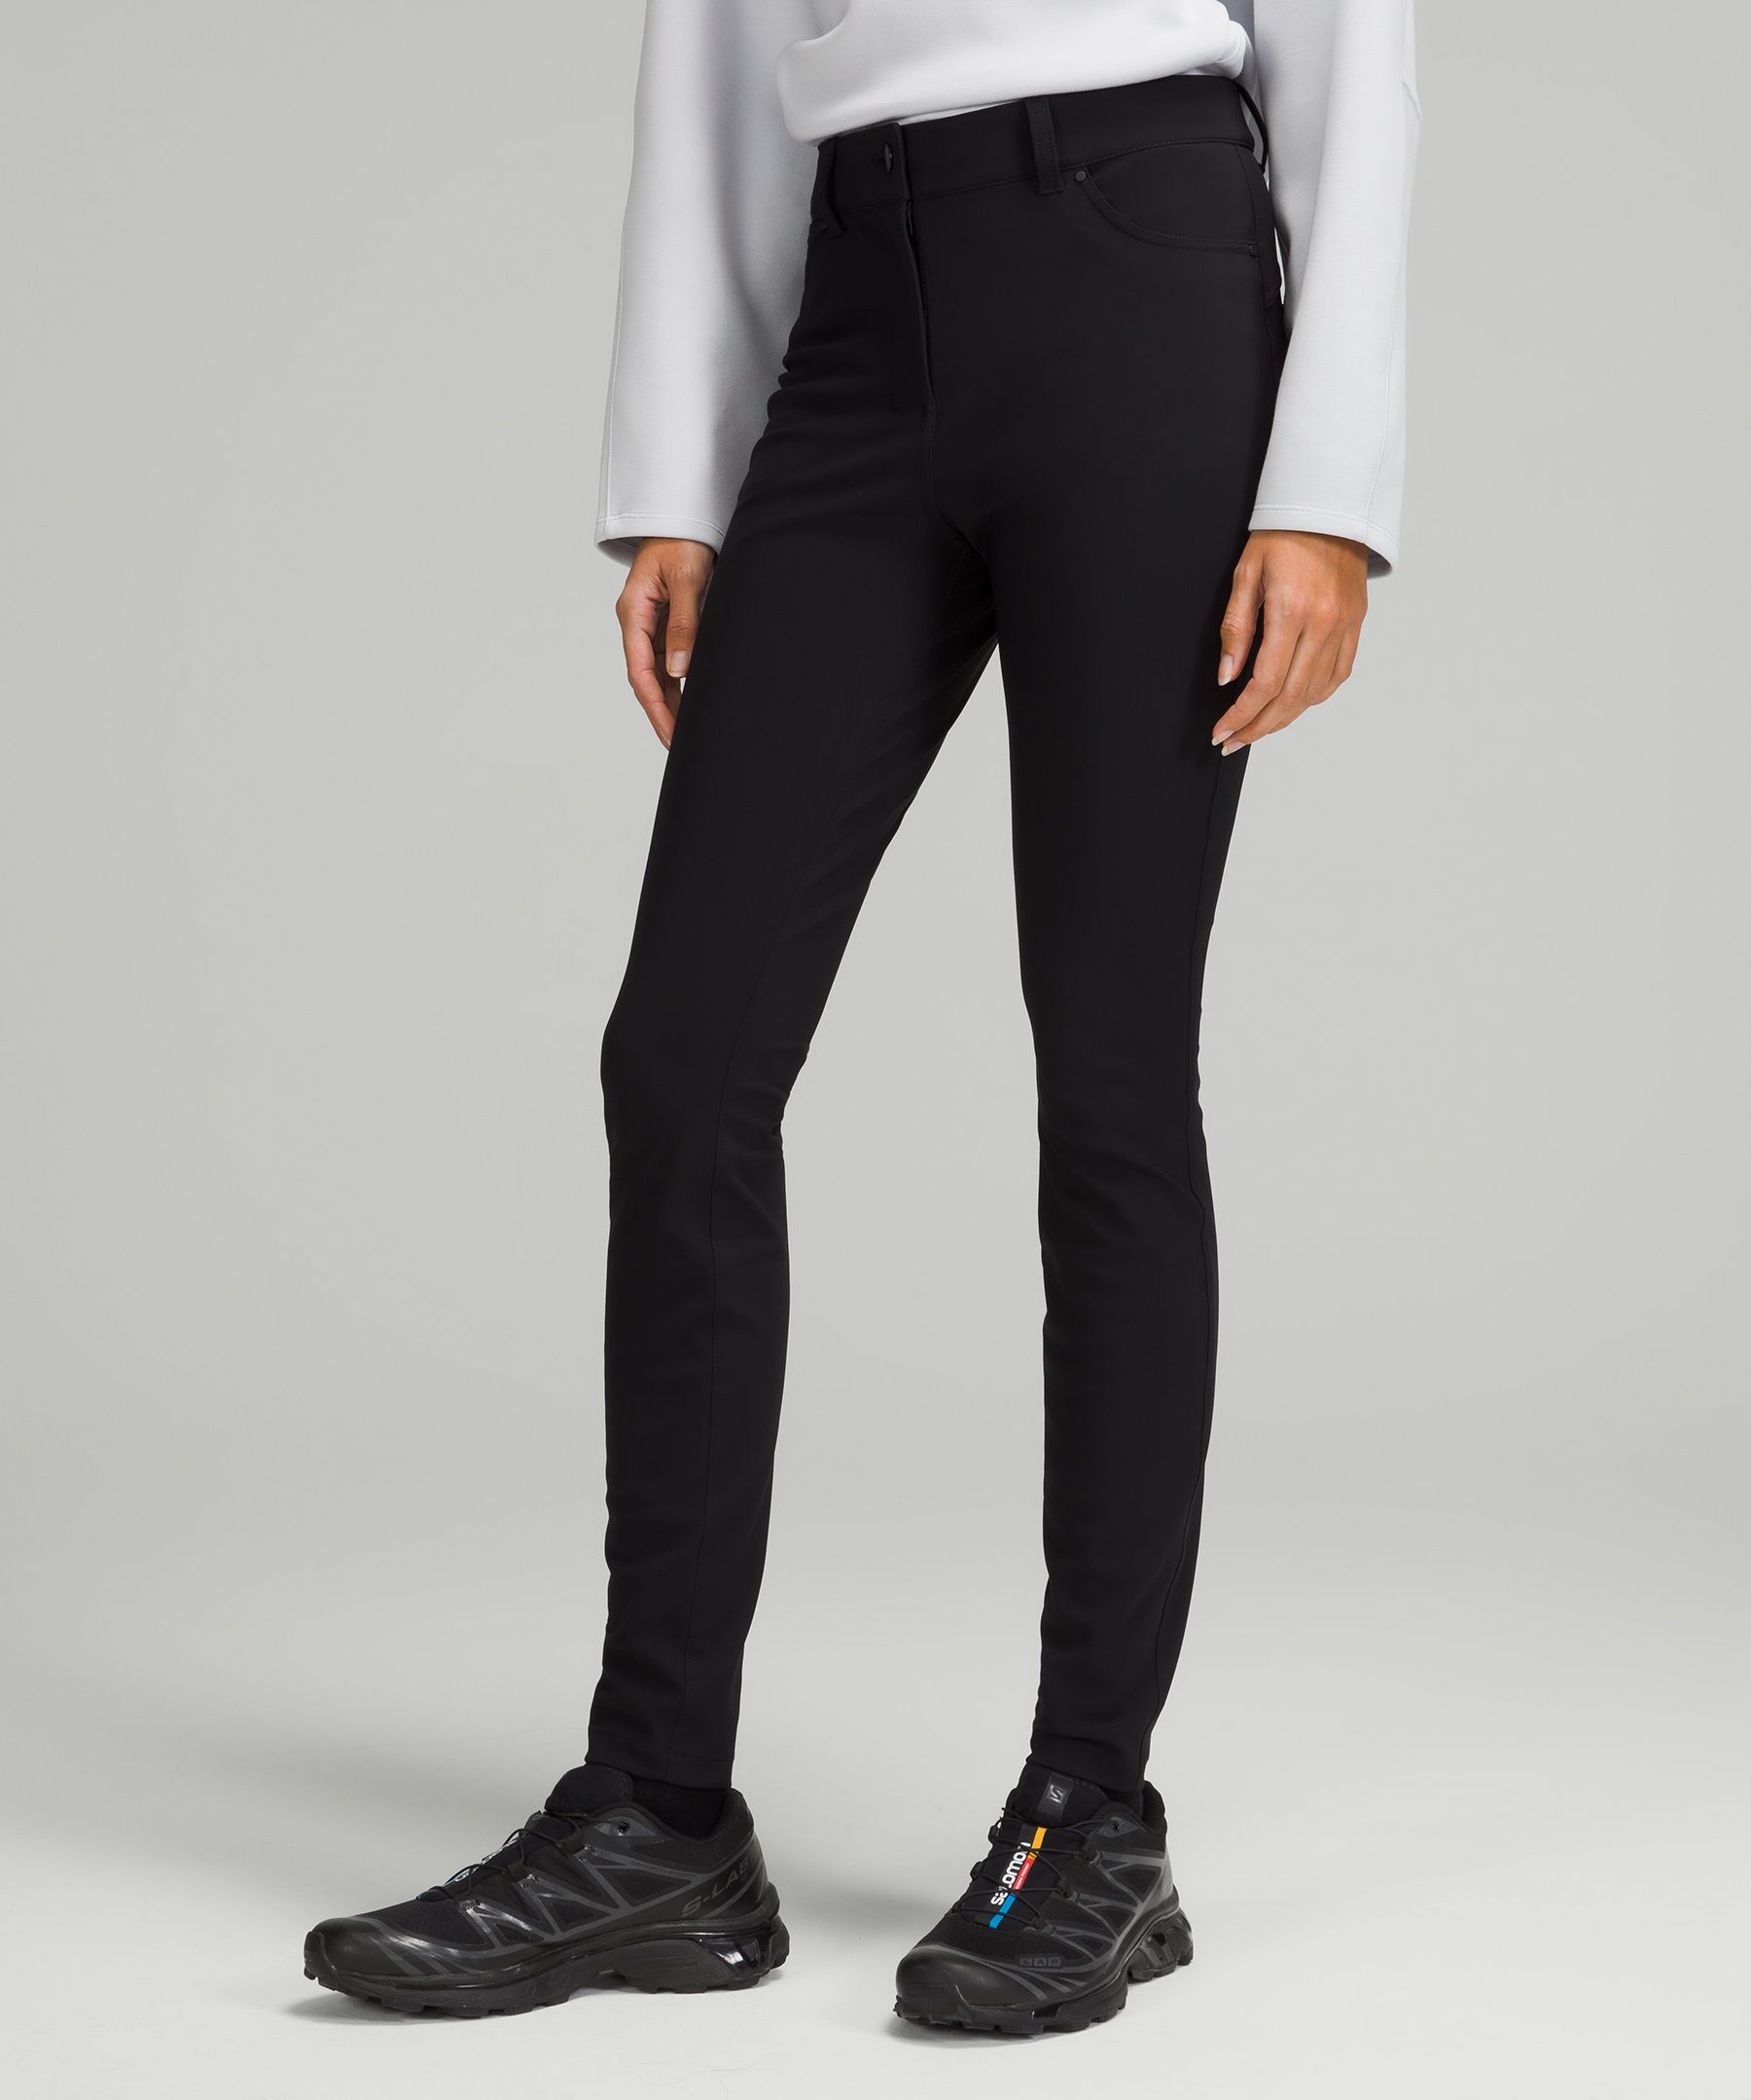 City Sleek Slim-Fit 5 Pocket High-Rise Pant | Women's Trousers | lululemon